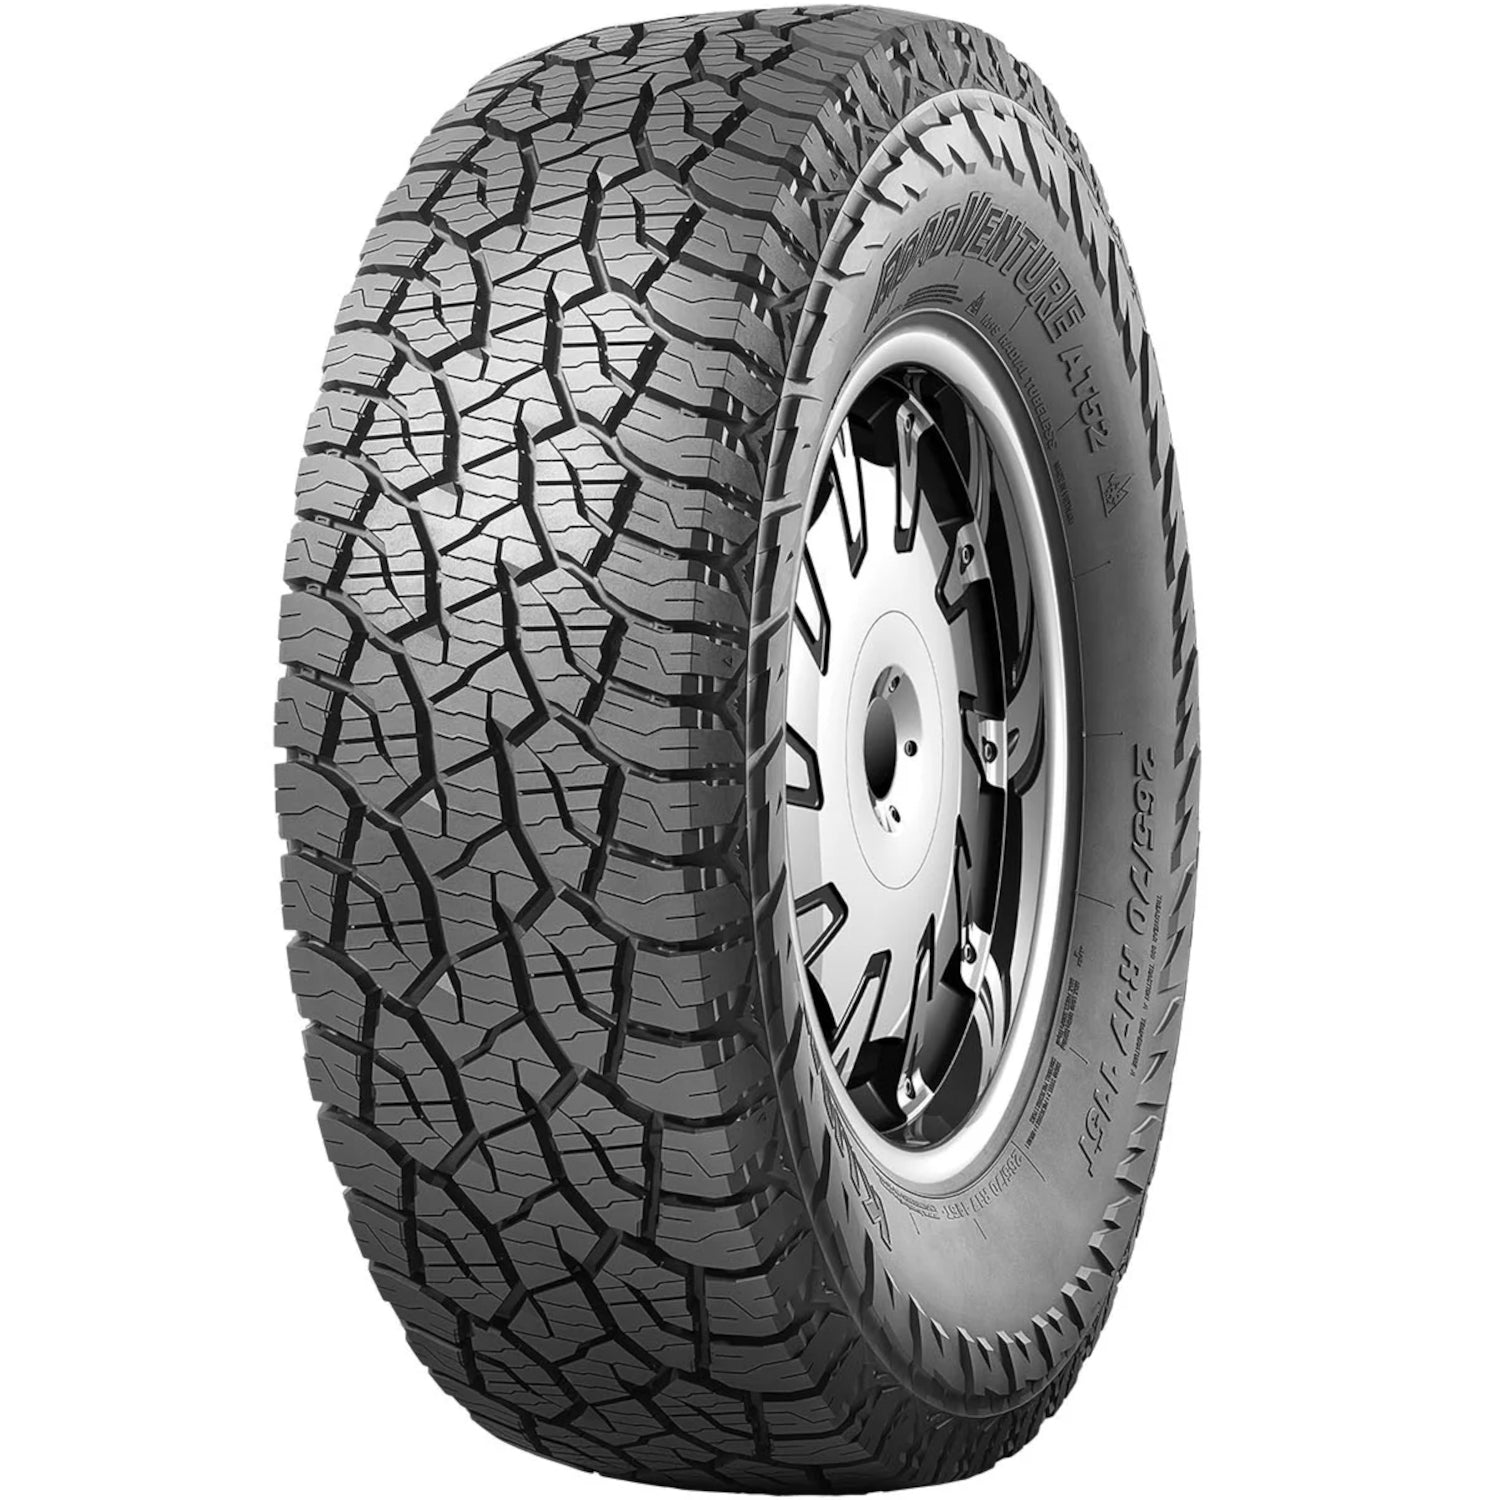 KUMHO ROAD VENTURE AT52 LT315/70R17 (34.4X12.4R 17) Tires